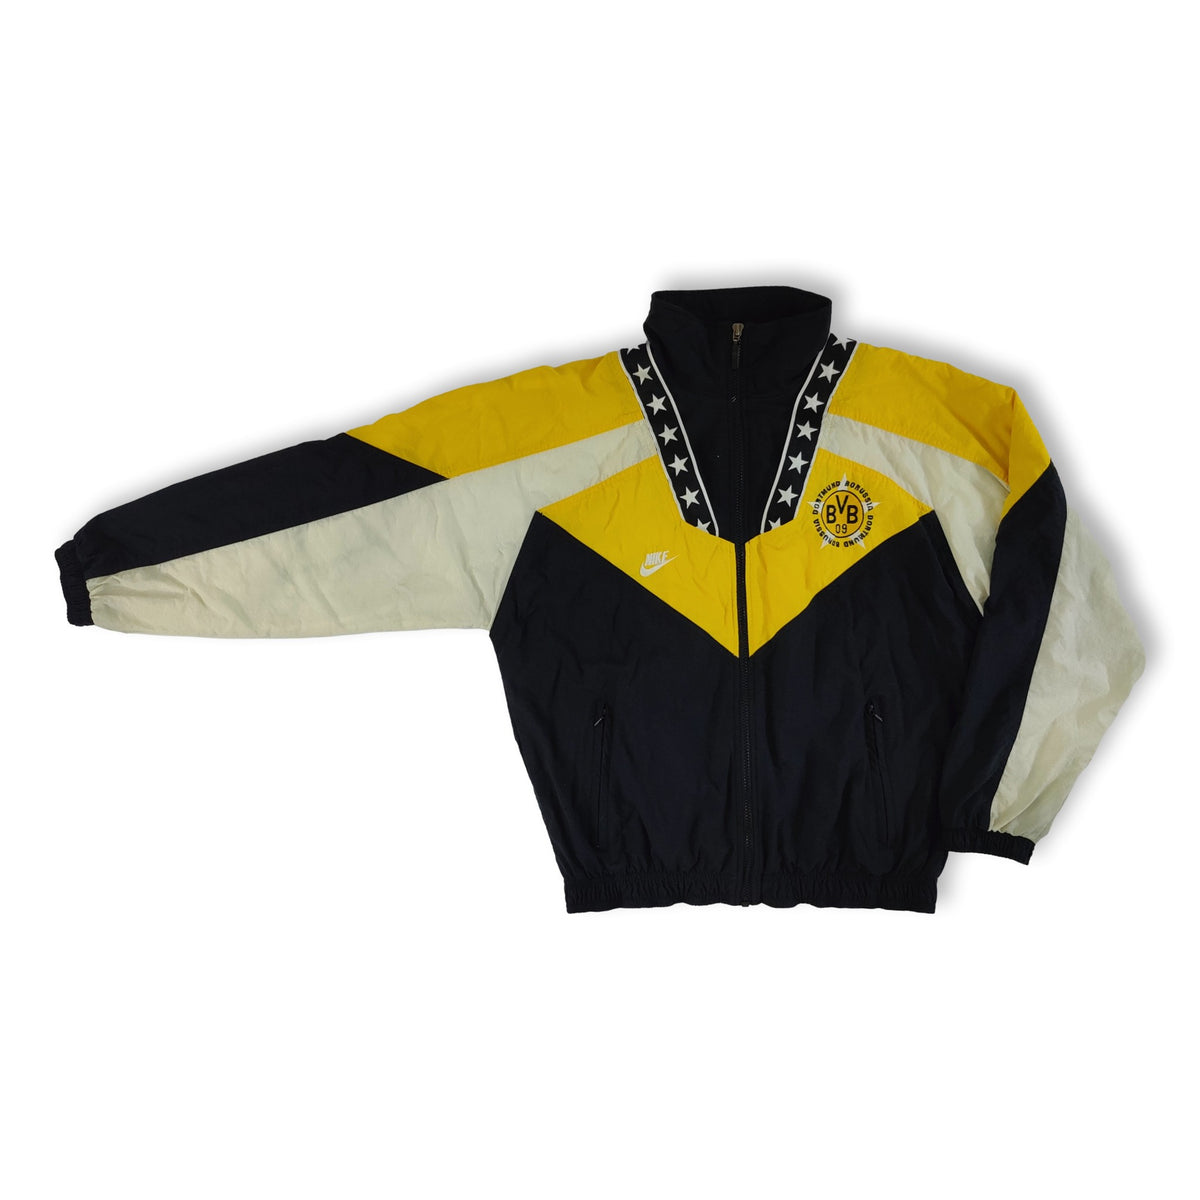 1989 Adidas Borussia Dortmund template shirt, retroiscooler